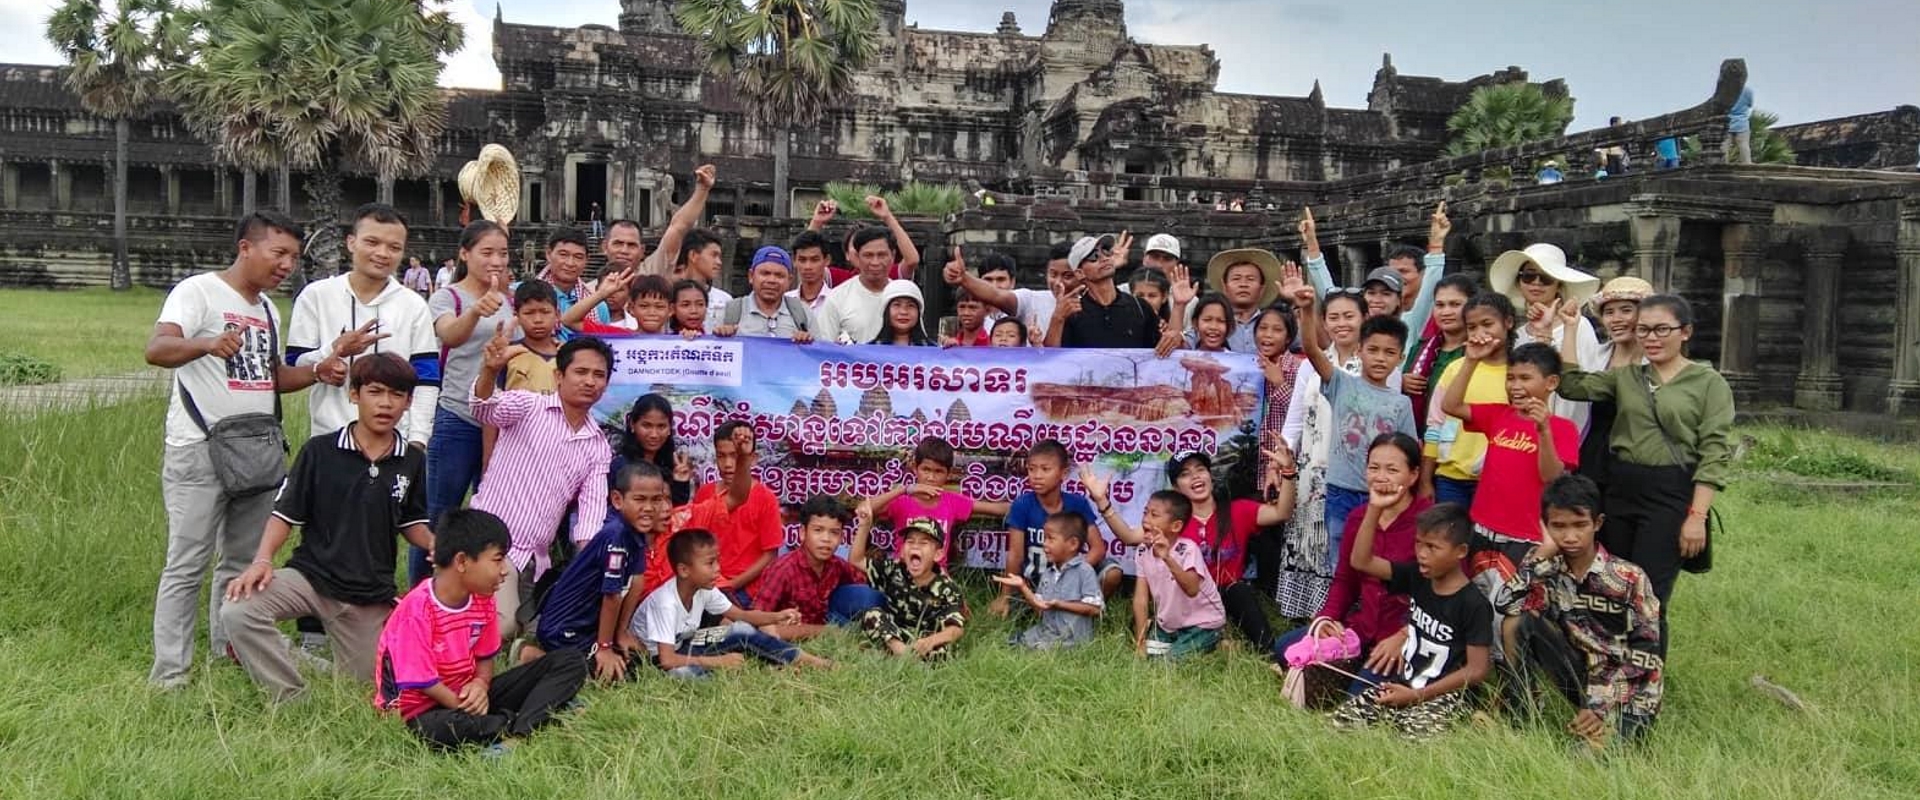 cambogia_templi_Angkor_mani tese_2018